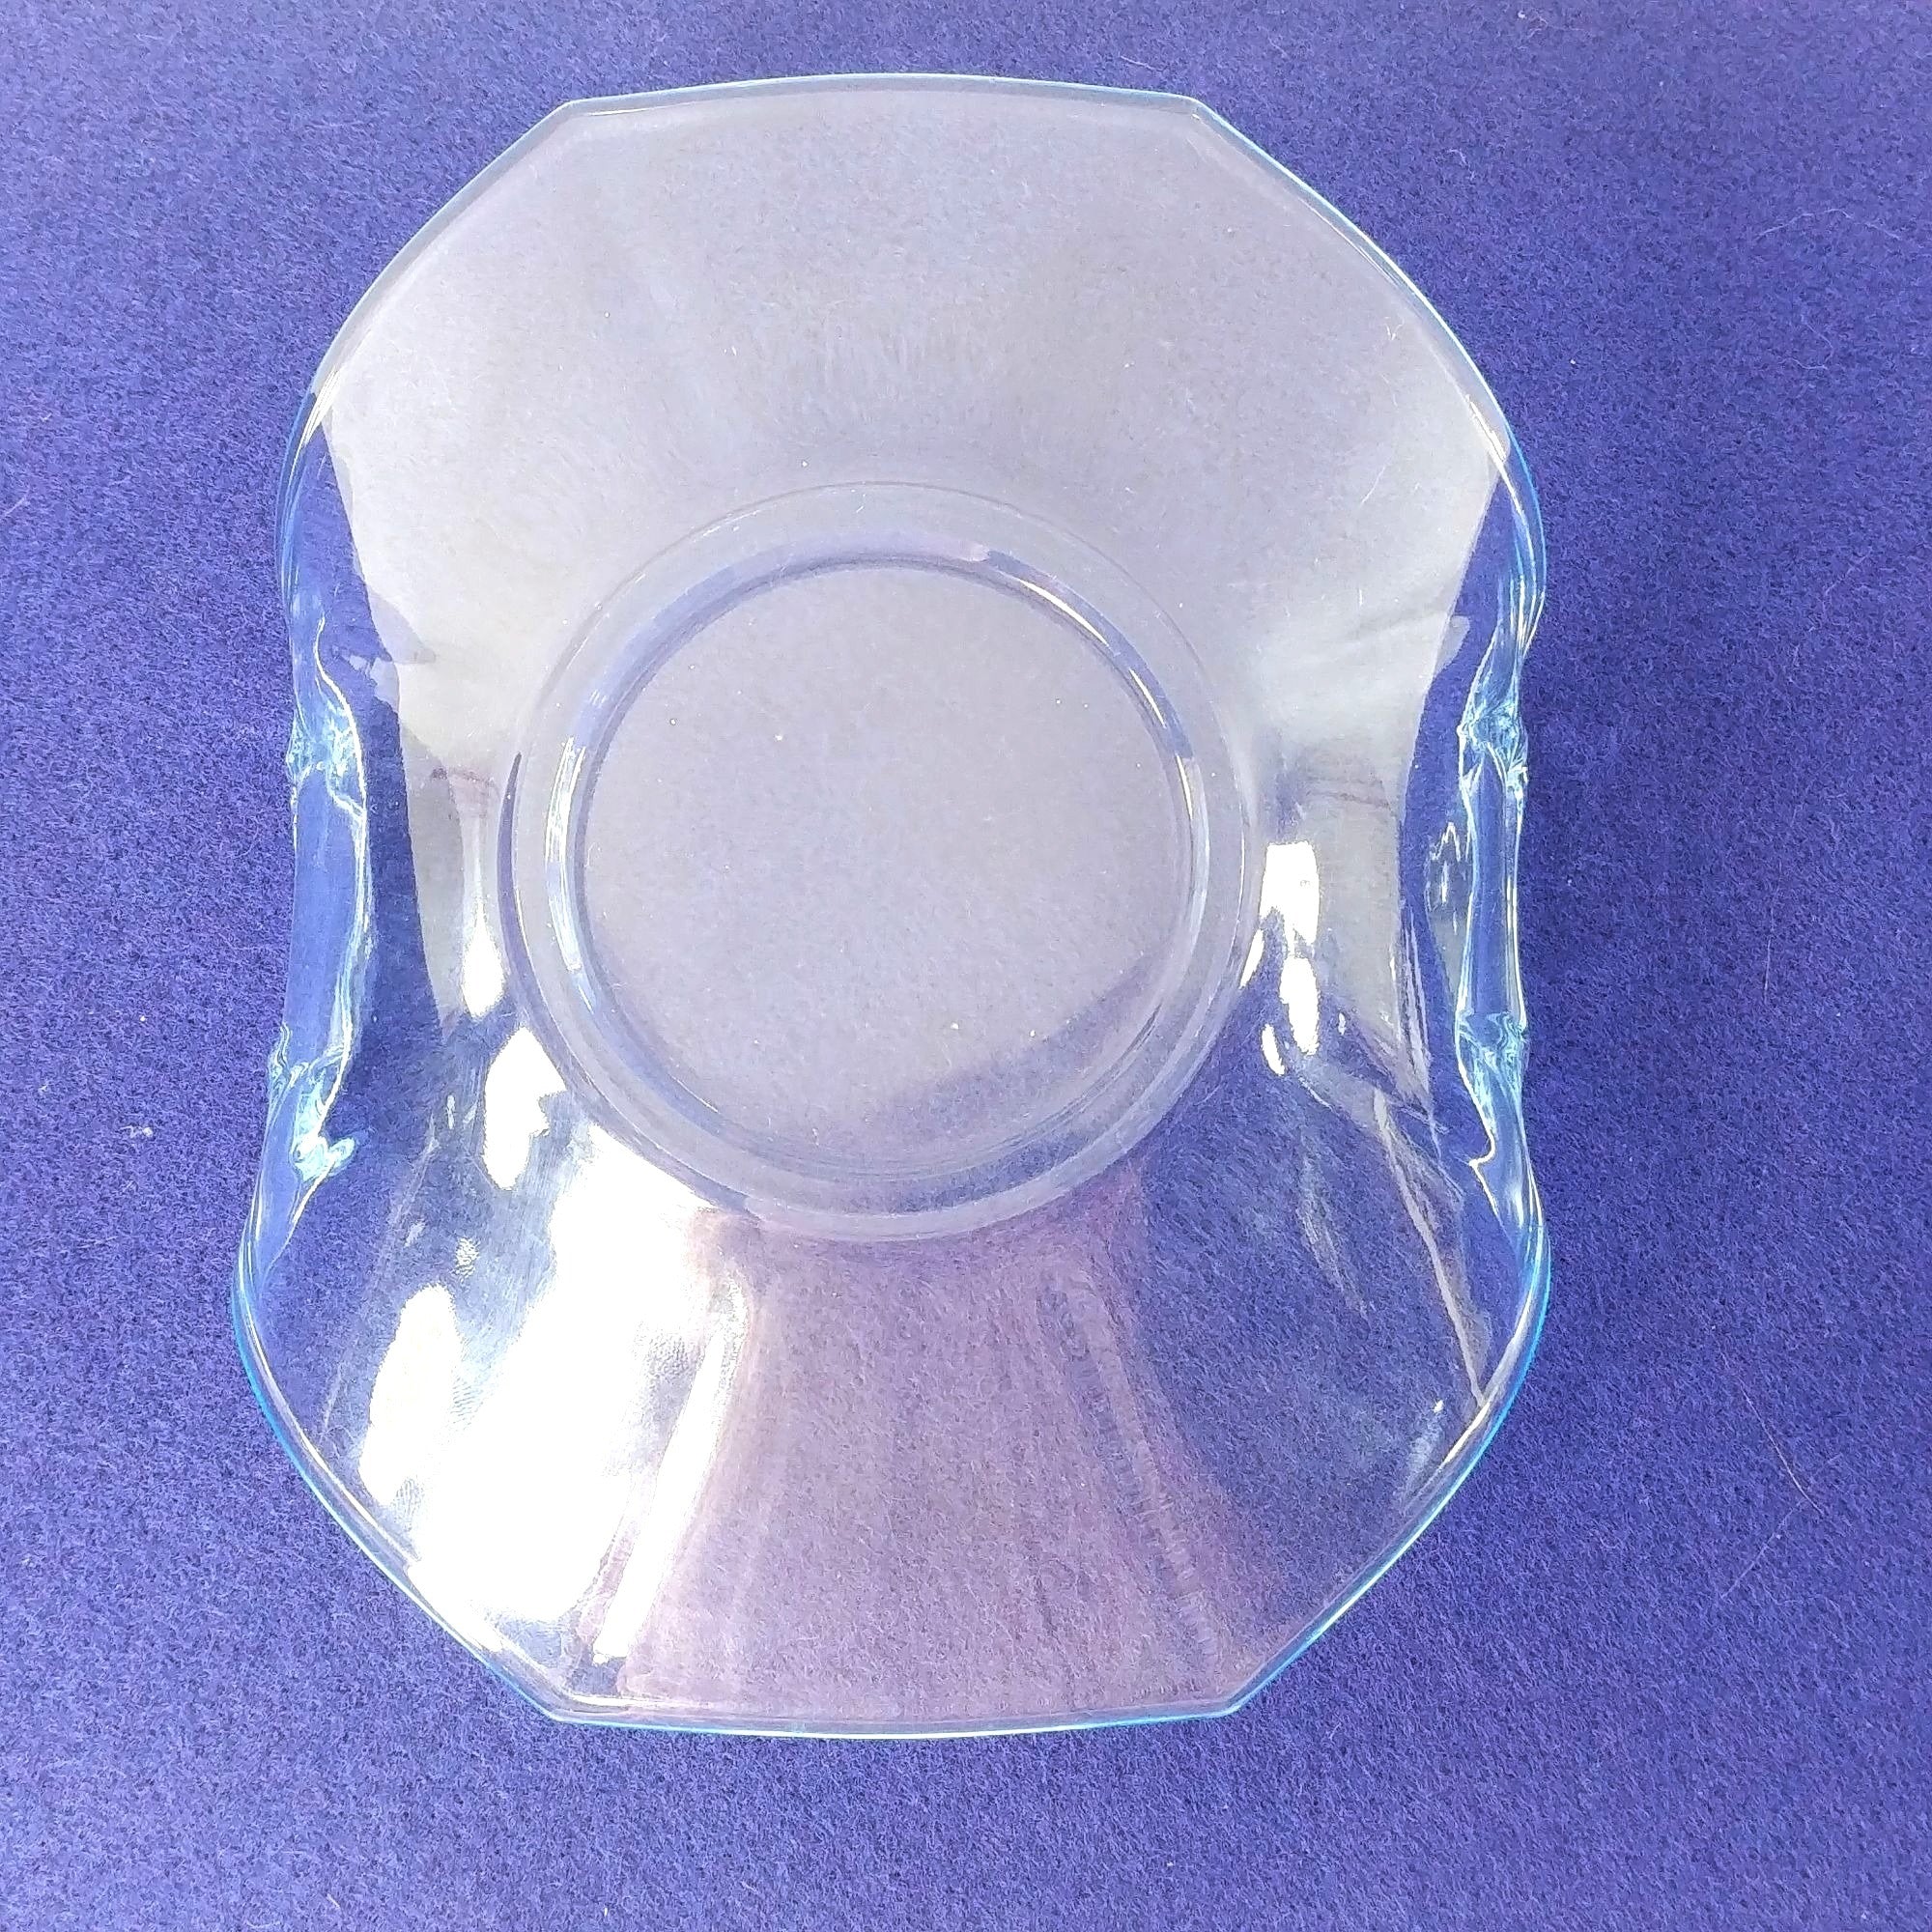 Candy Dish Candle Holder Blue Glass Folded Sides Decorative Handles Vintage